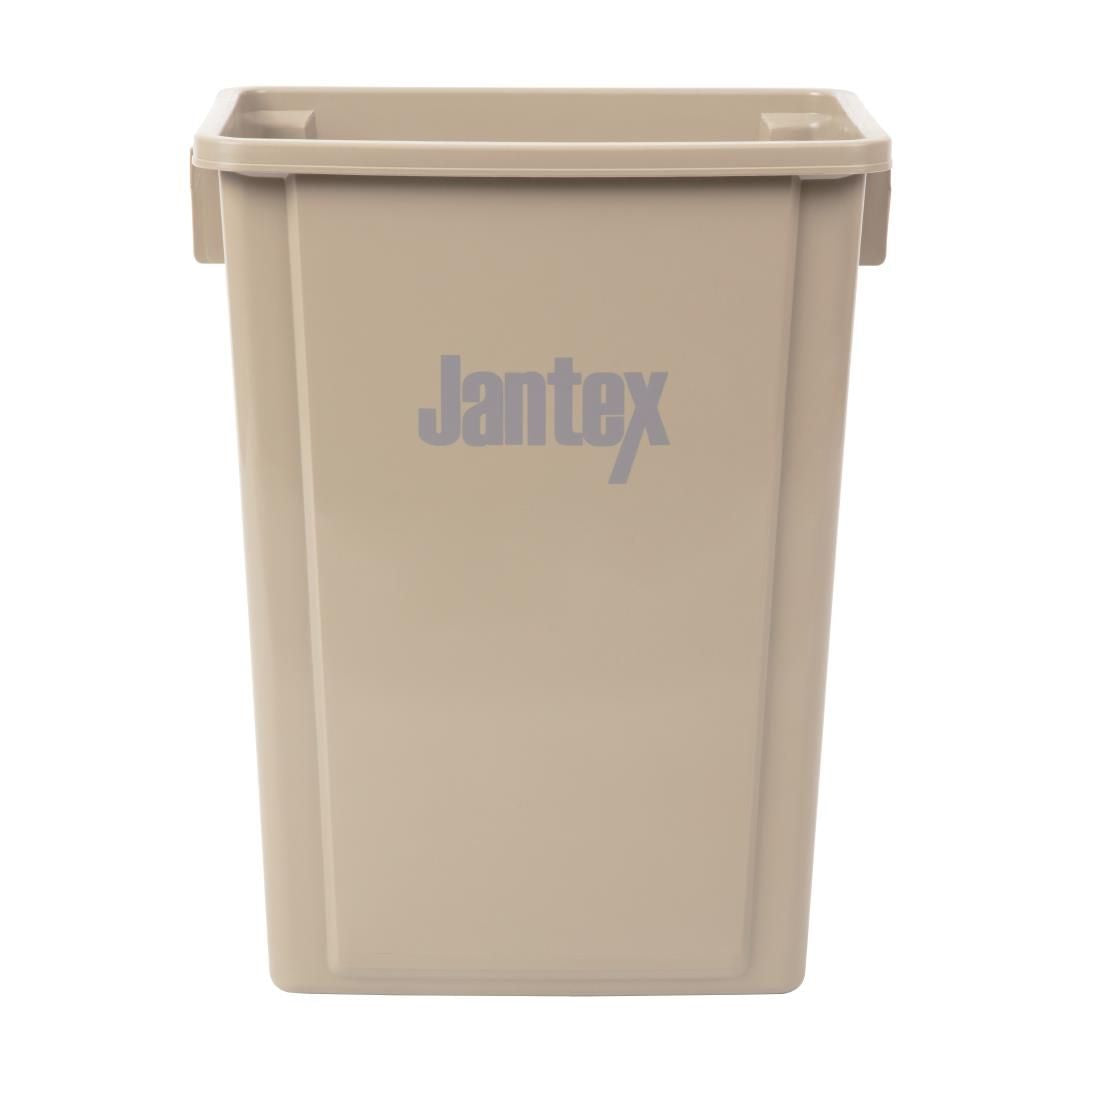 Jantex Recycling Bin Beige 56L JD Catering Equipment Solutions Ltd